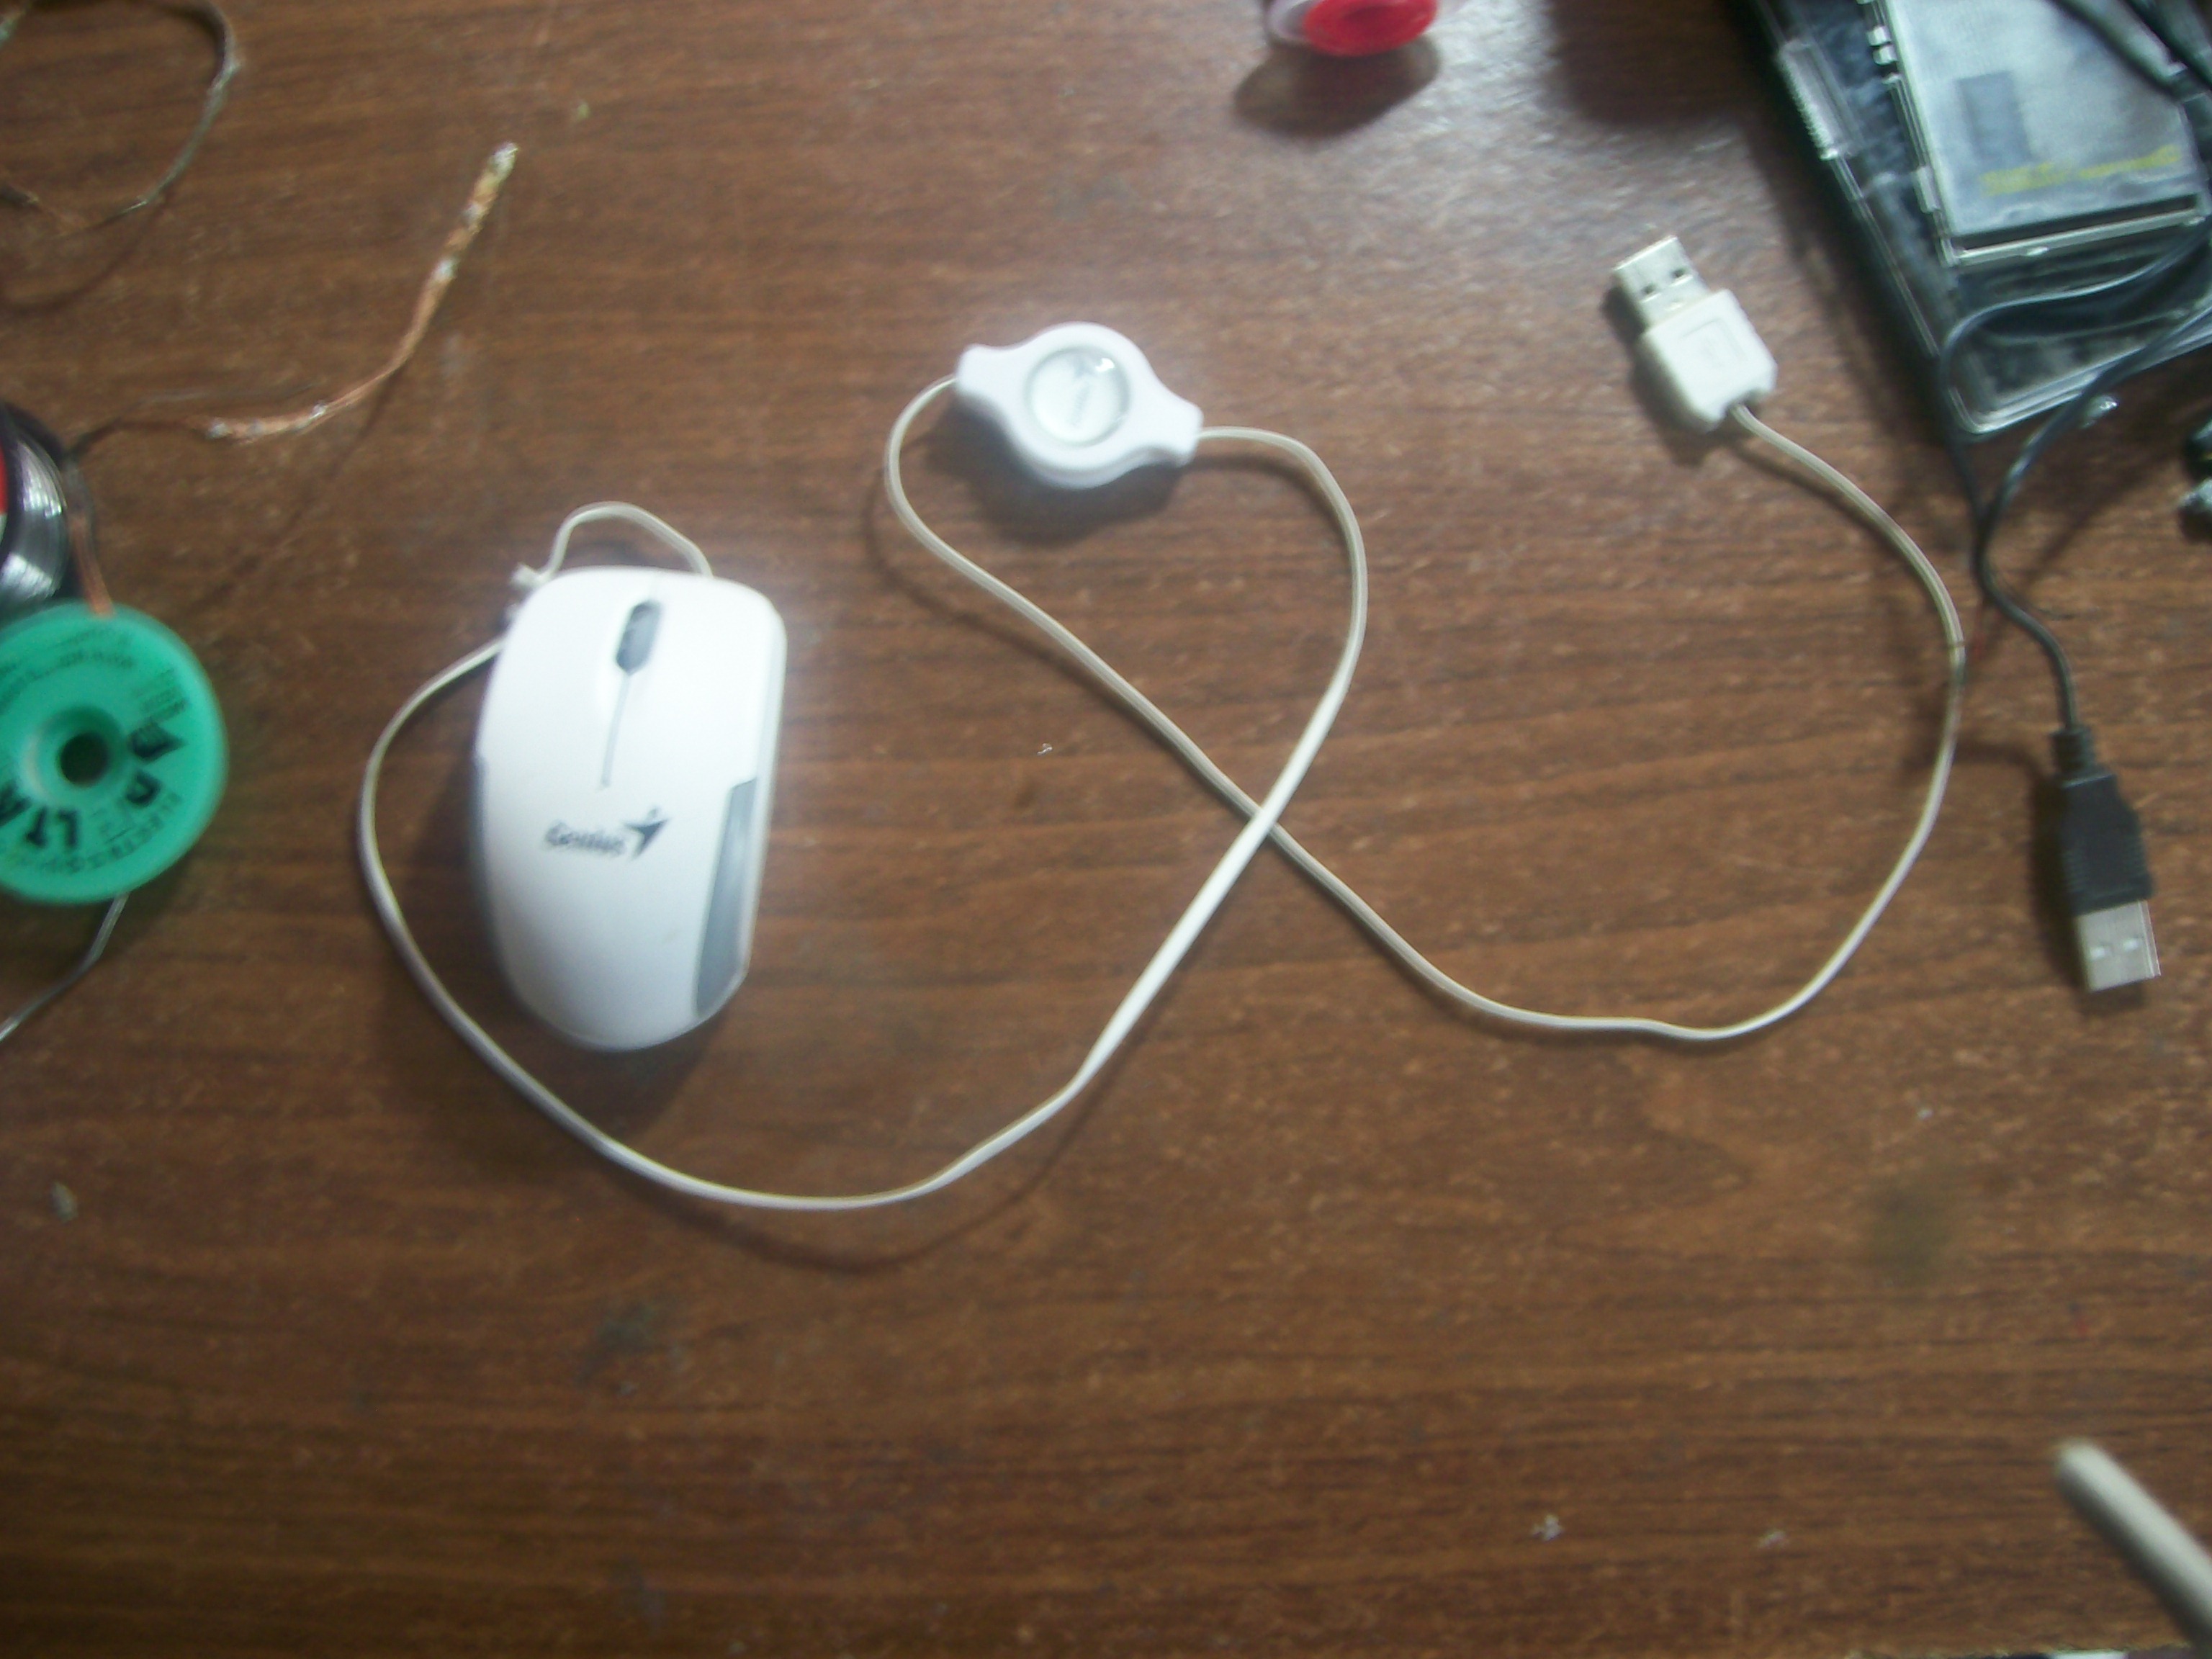 Reparar Mouse (Remplazar A Cable USB)